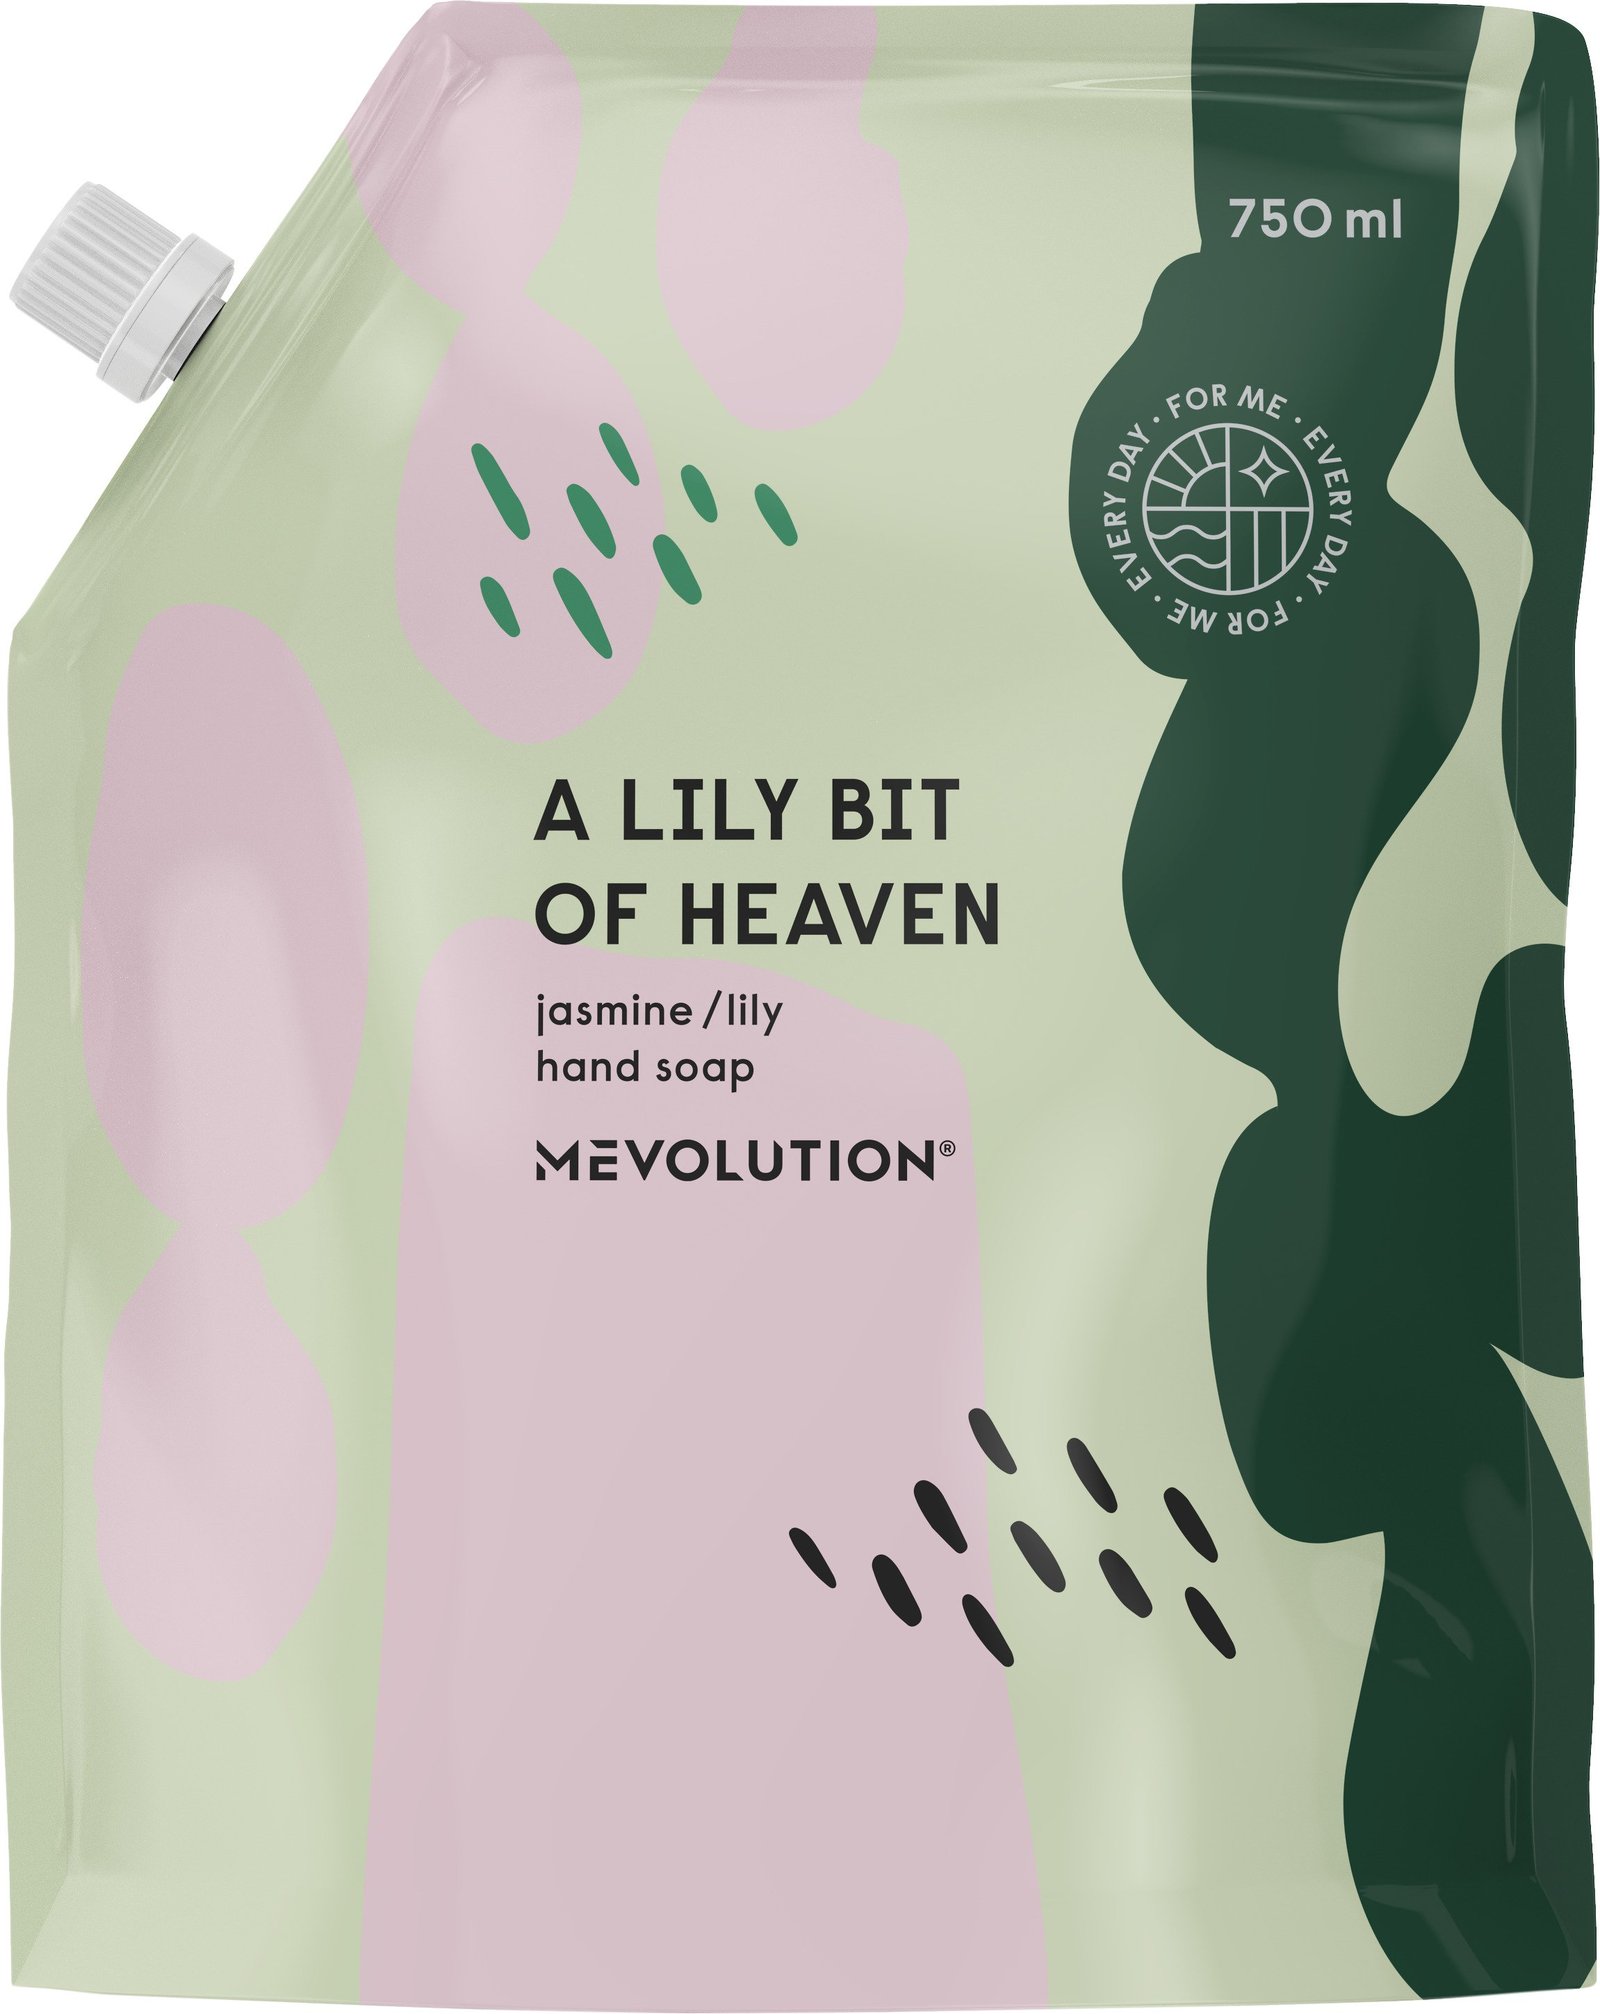 Mevolution A Lily Bit Of Heaven Hand Soap 750 ml